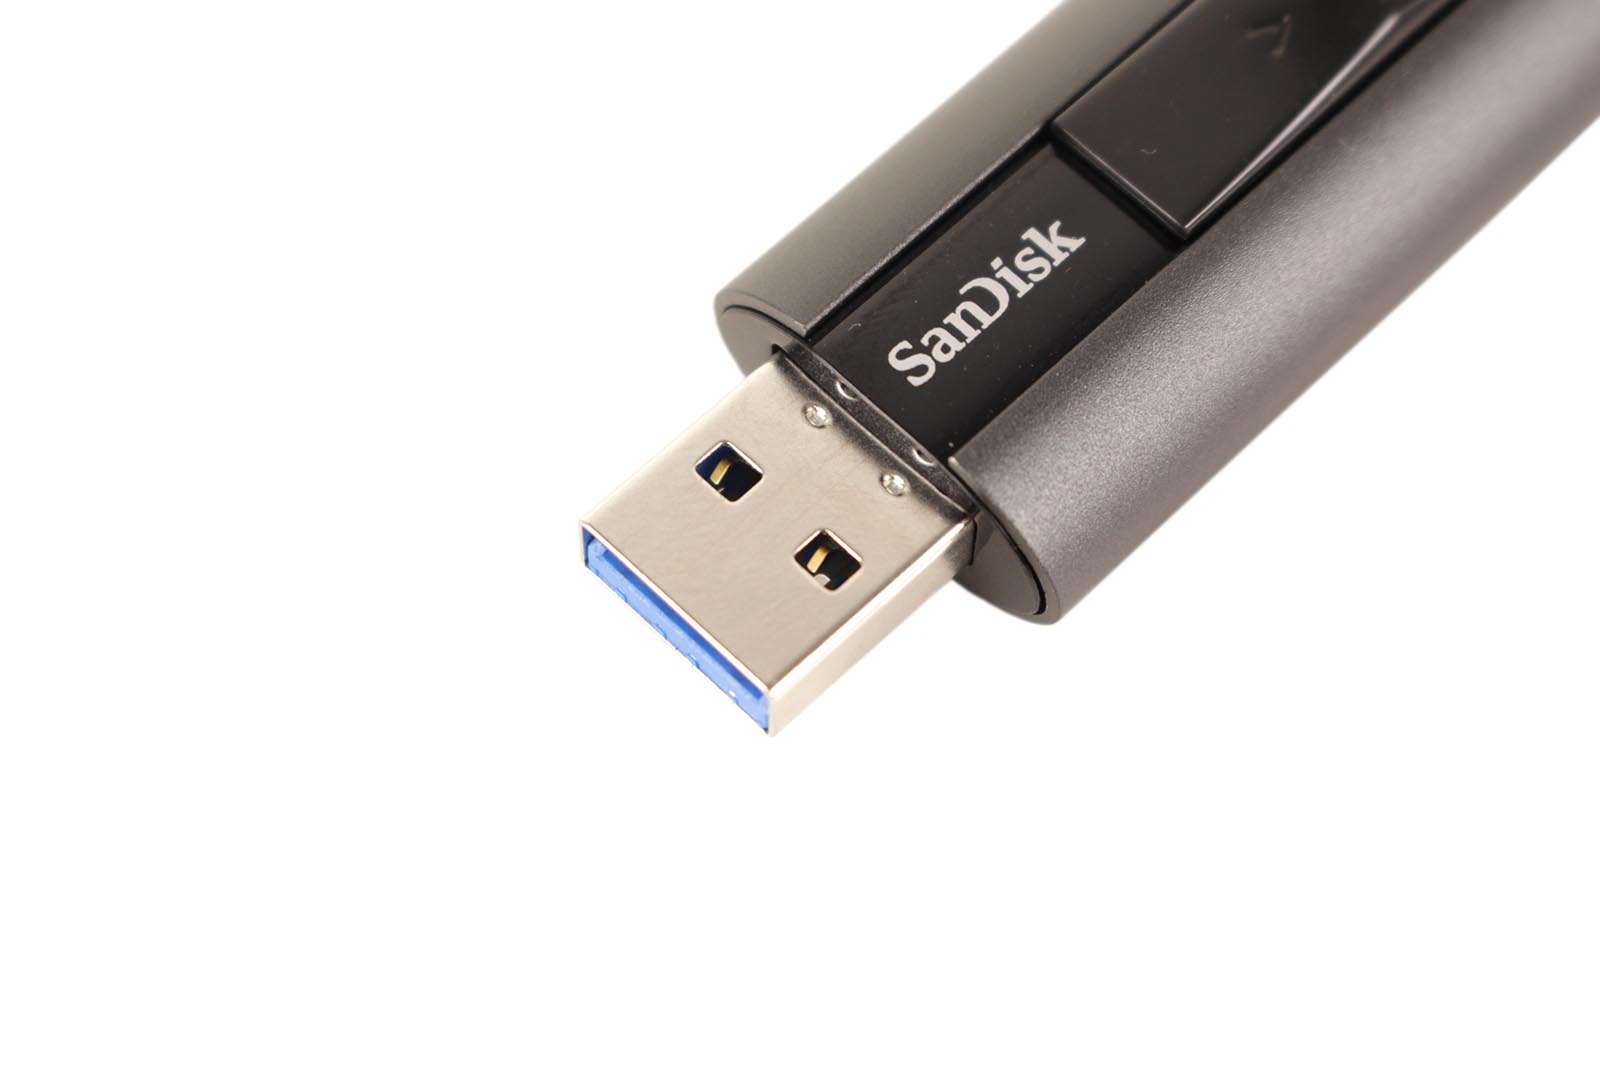 SanDisk Extreme Pro USB 3.1 - Anschluss